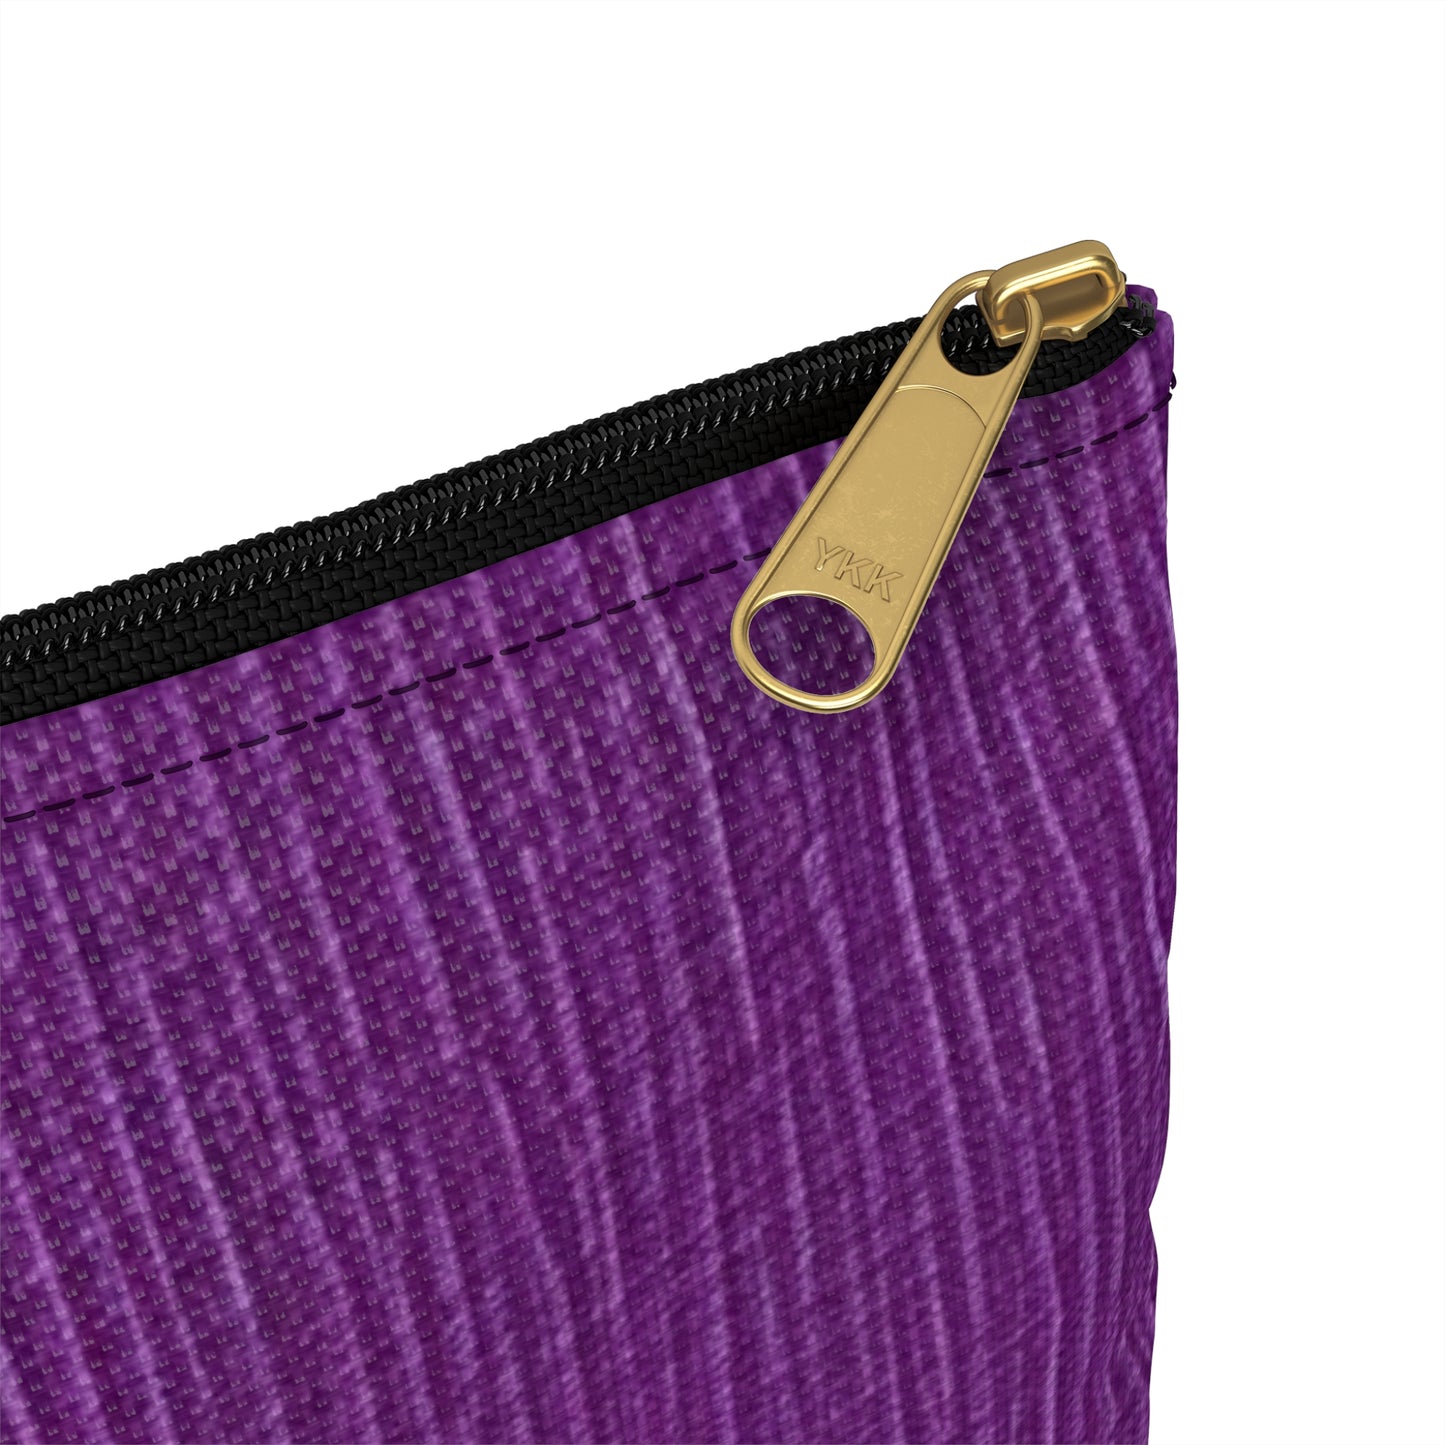 Violet/Plum/Purple: Denim-Inspired Luxurious Fabric - Accessory Pouch